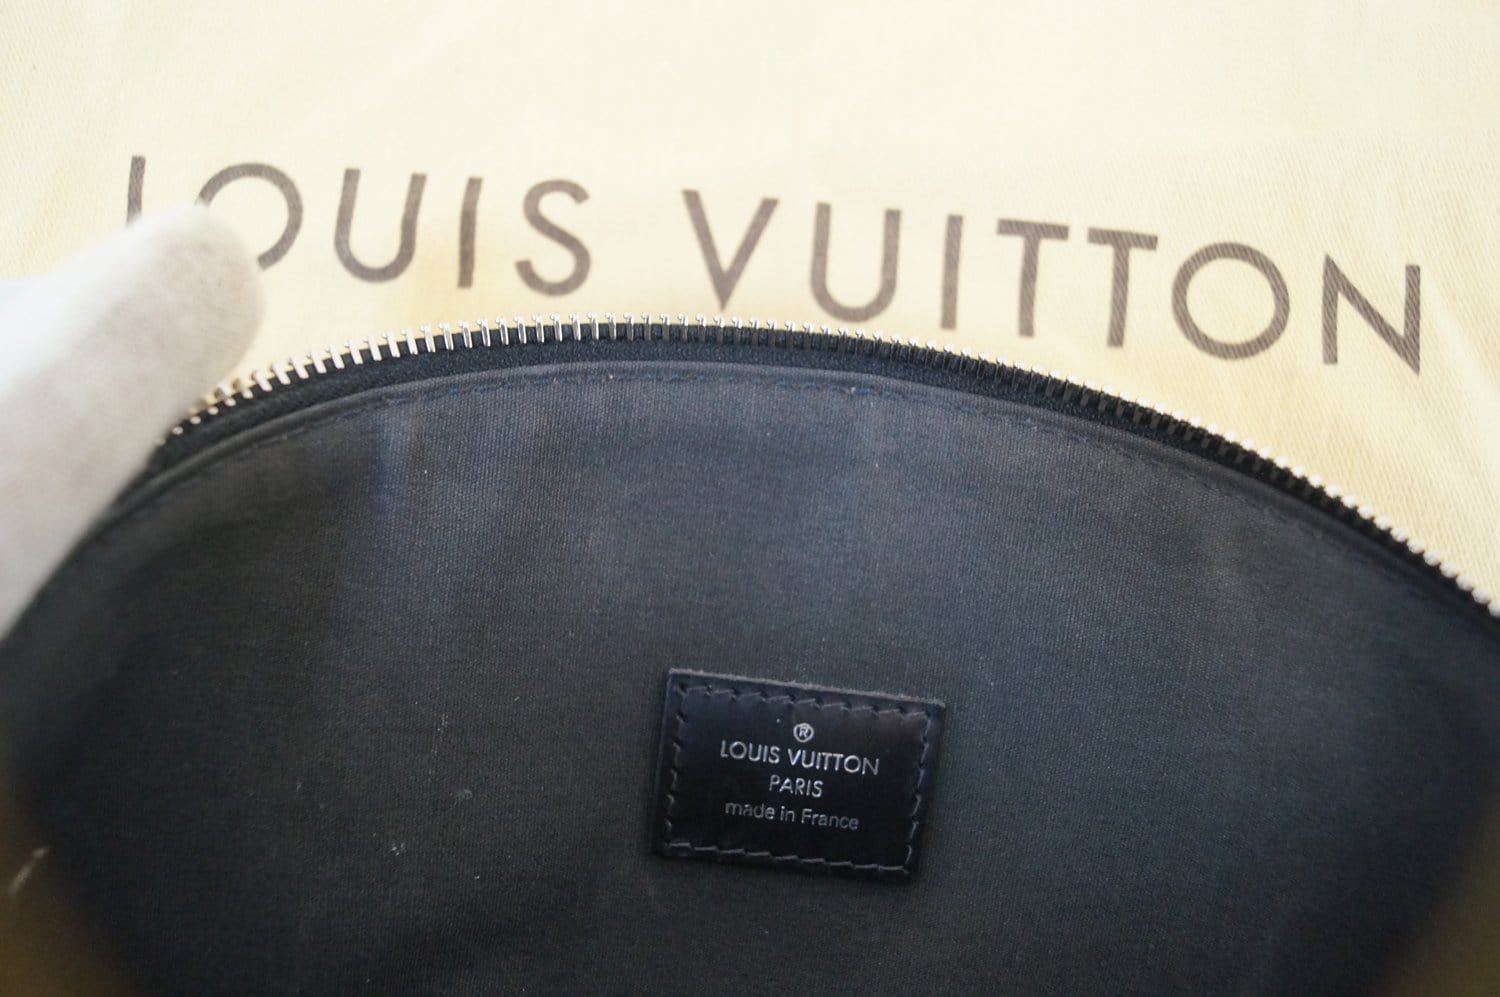 Louis Vuitton M80819 LV Padlock on Strap bag in Black Epi Leather Replica  sale online ,buy fake bag